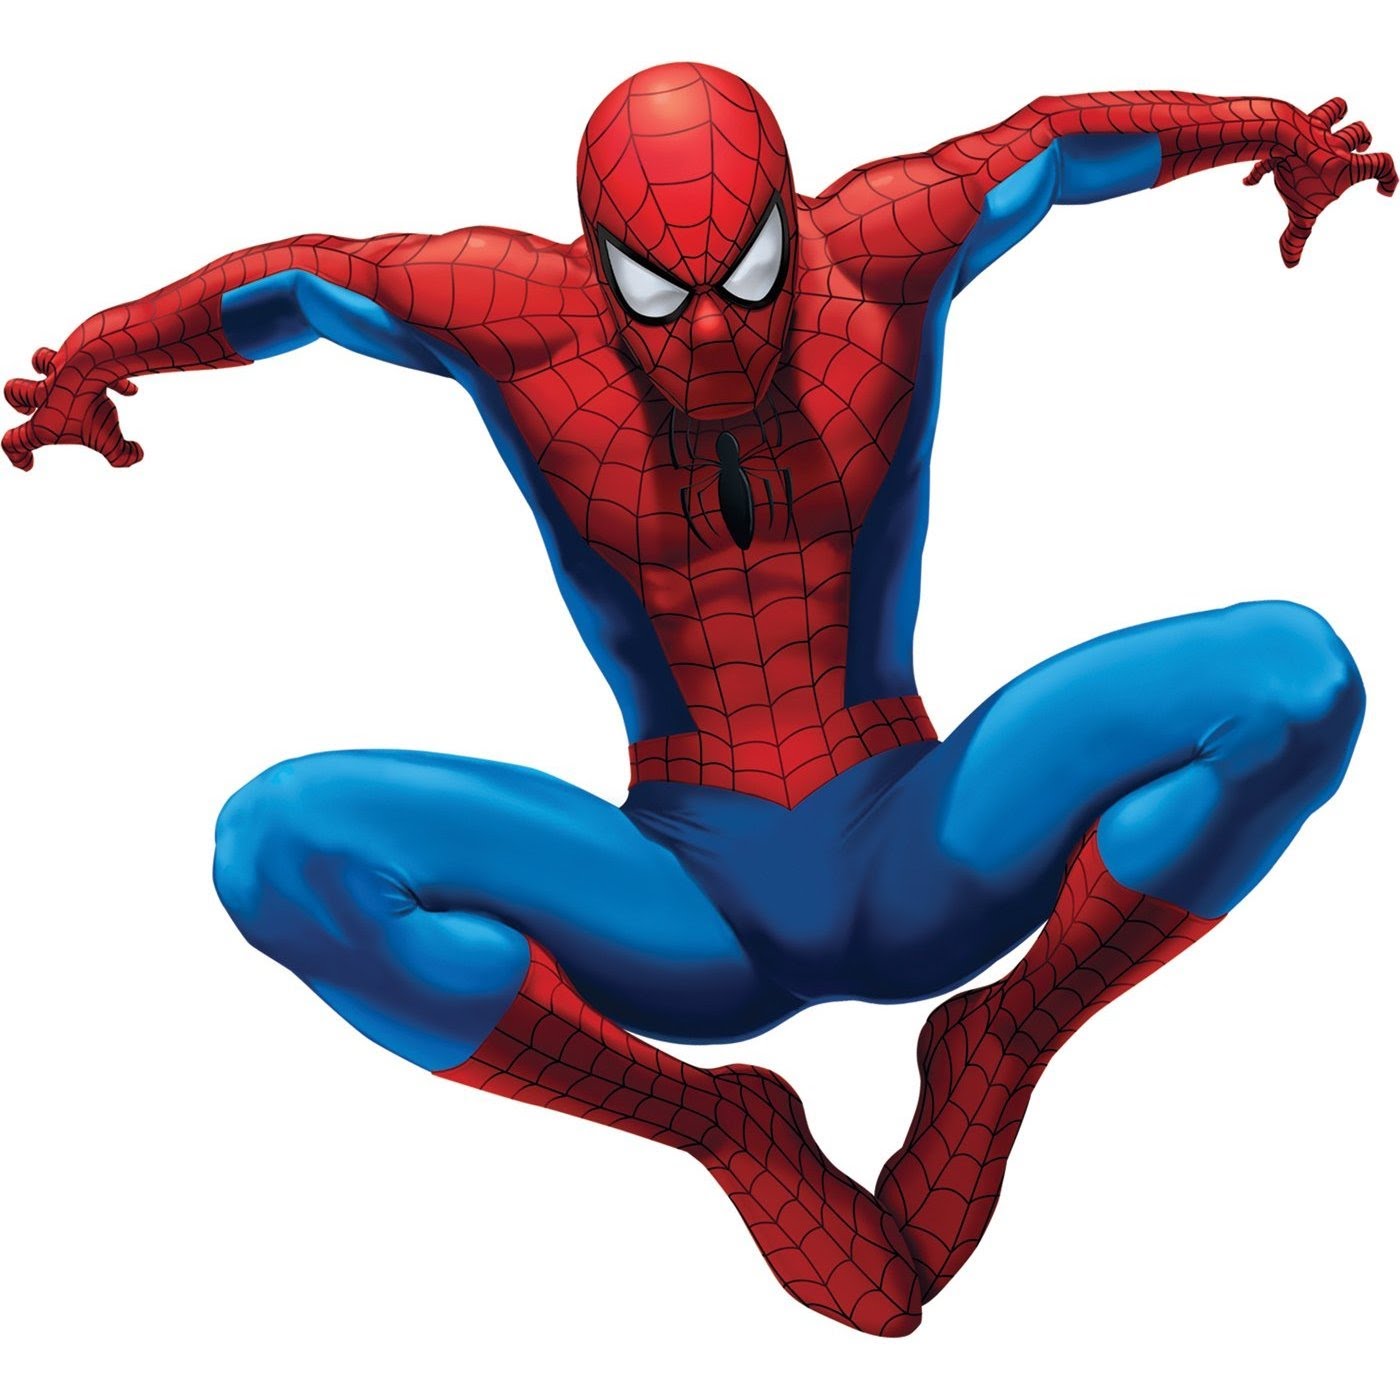 Spiderman Cartoon HD Image Wallpaper